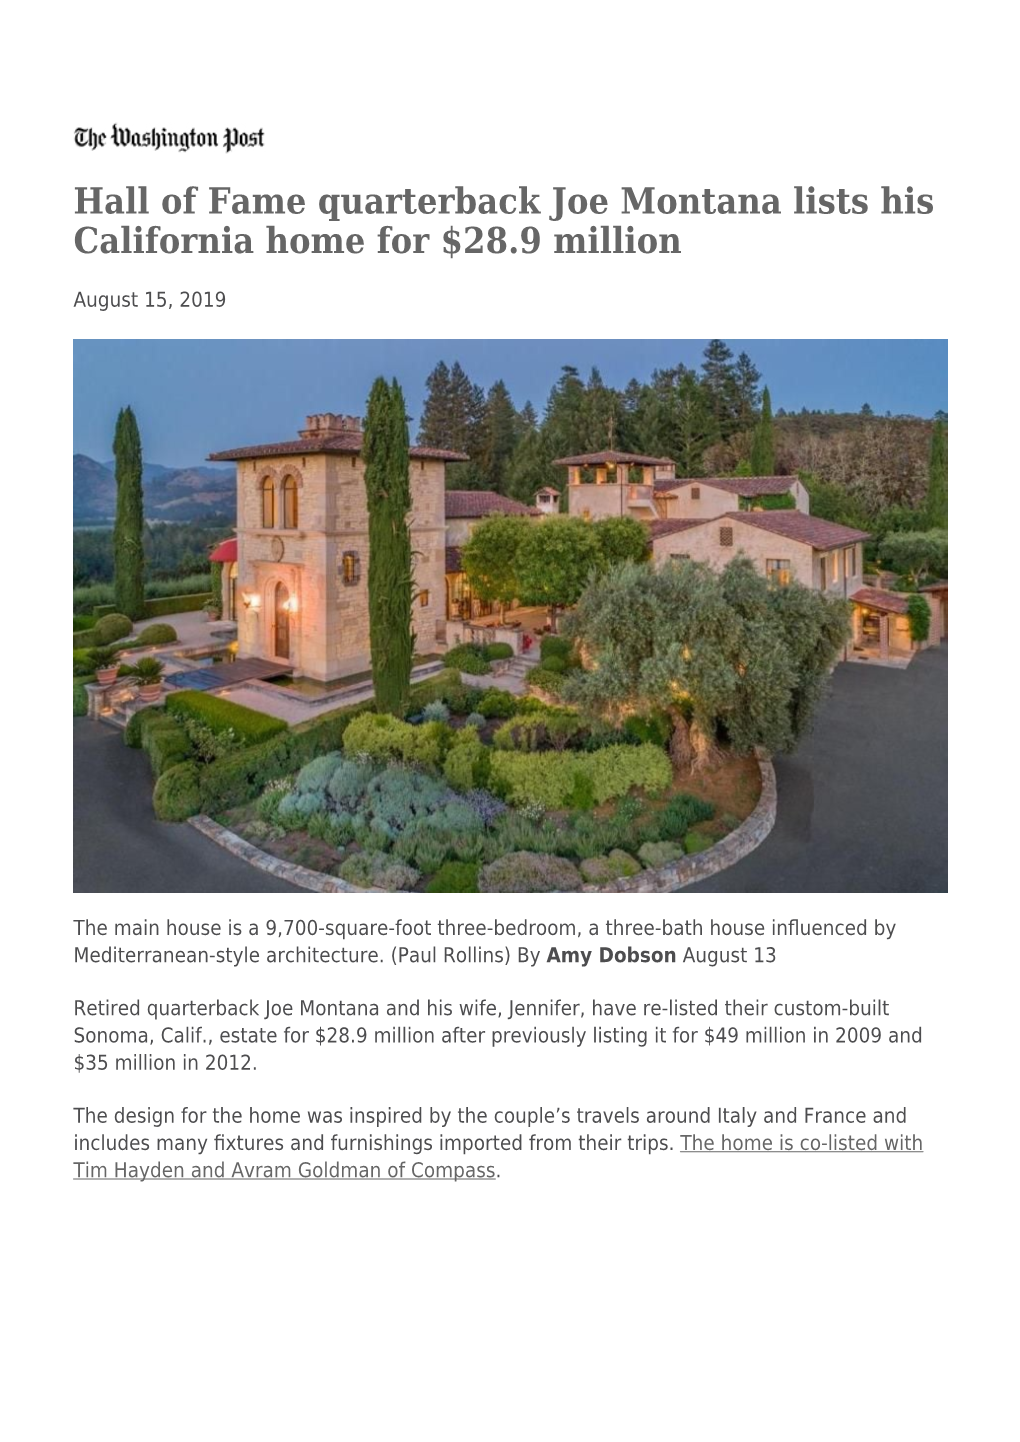 Hall of Fame Quarterback Joe Montana Lists His California Home for $28.9 Million